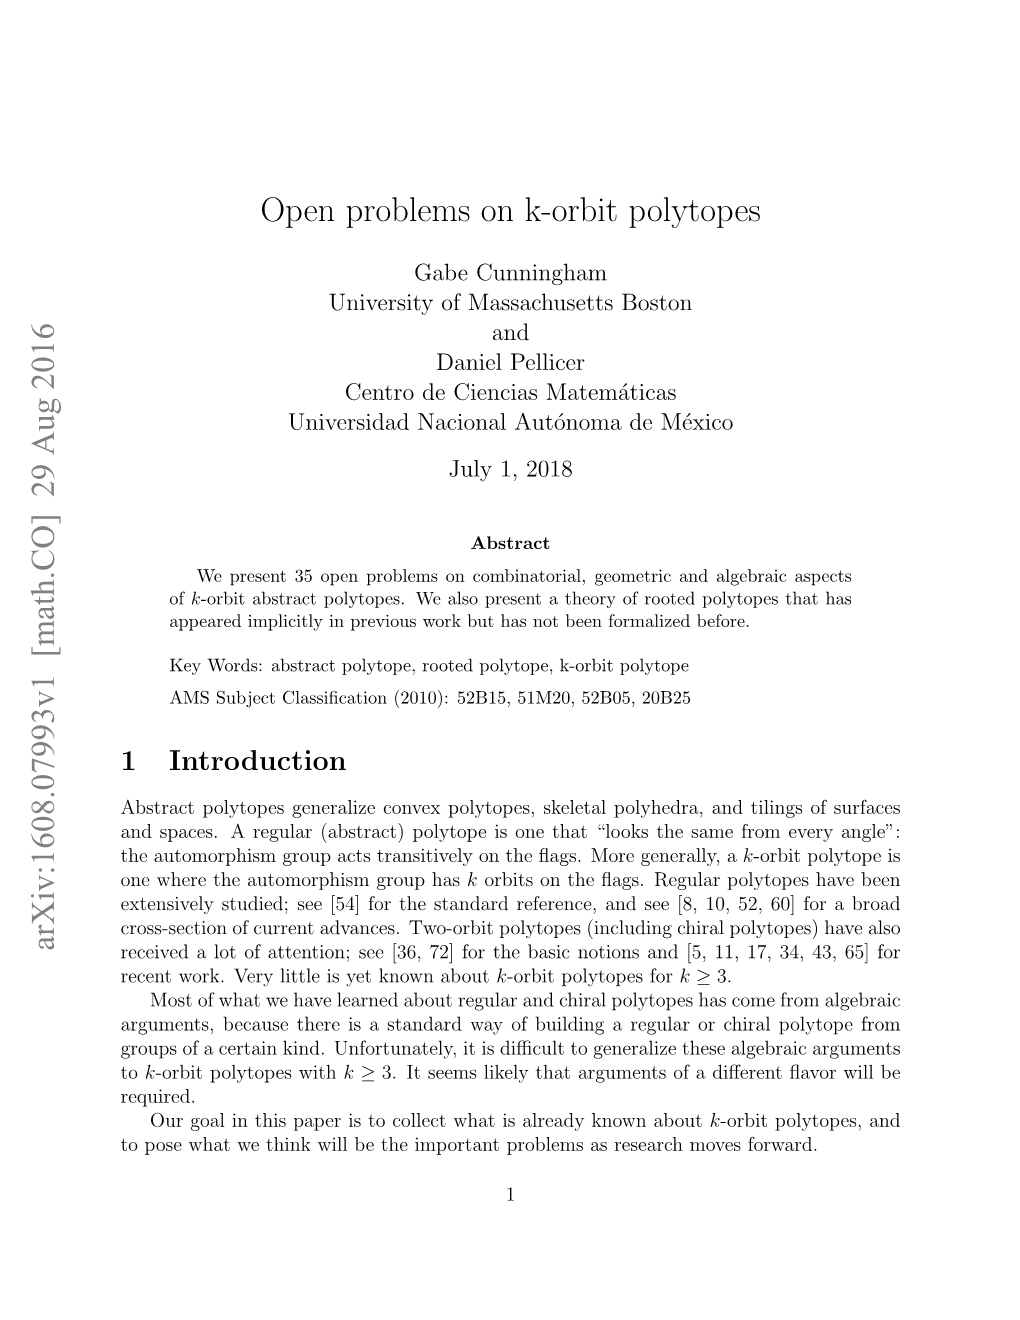 Open Problems on K-Orbit Polytopes Arxiv:1608.07993V1 [Math.CO] 29